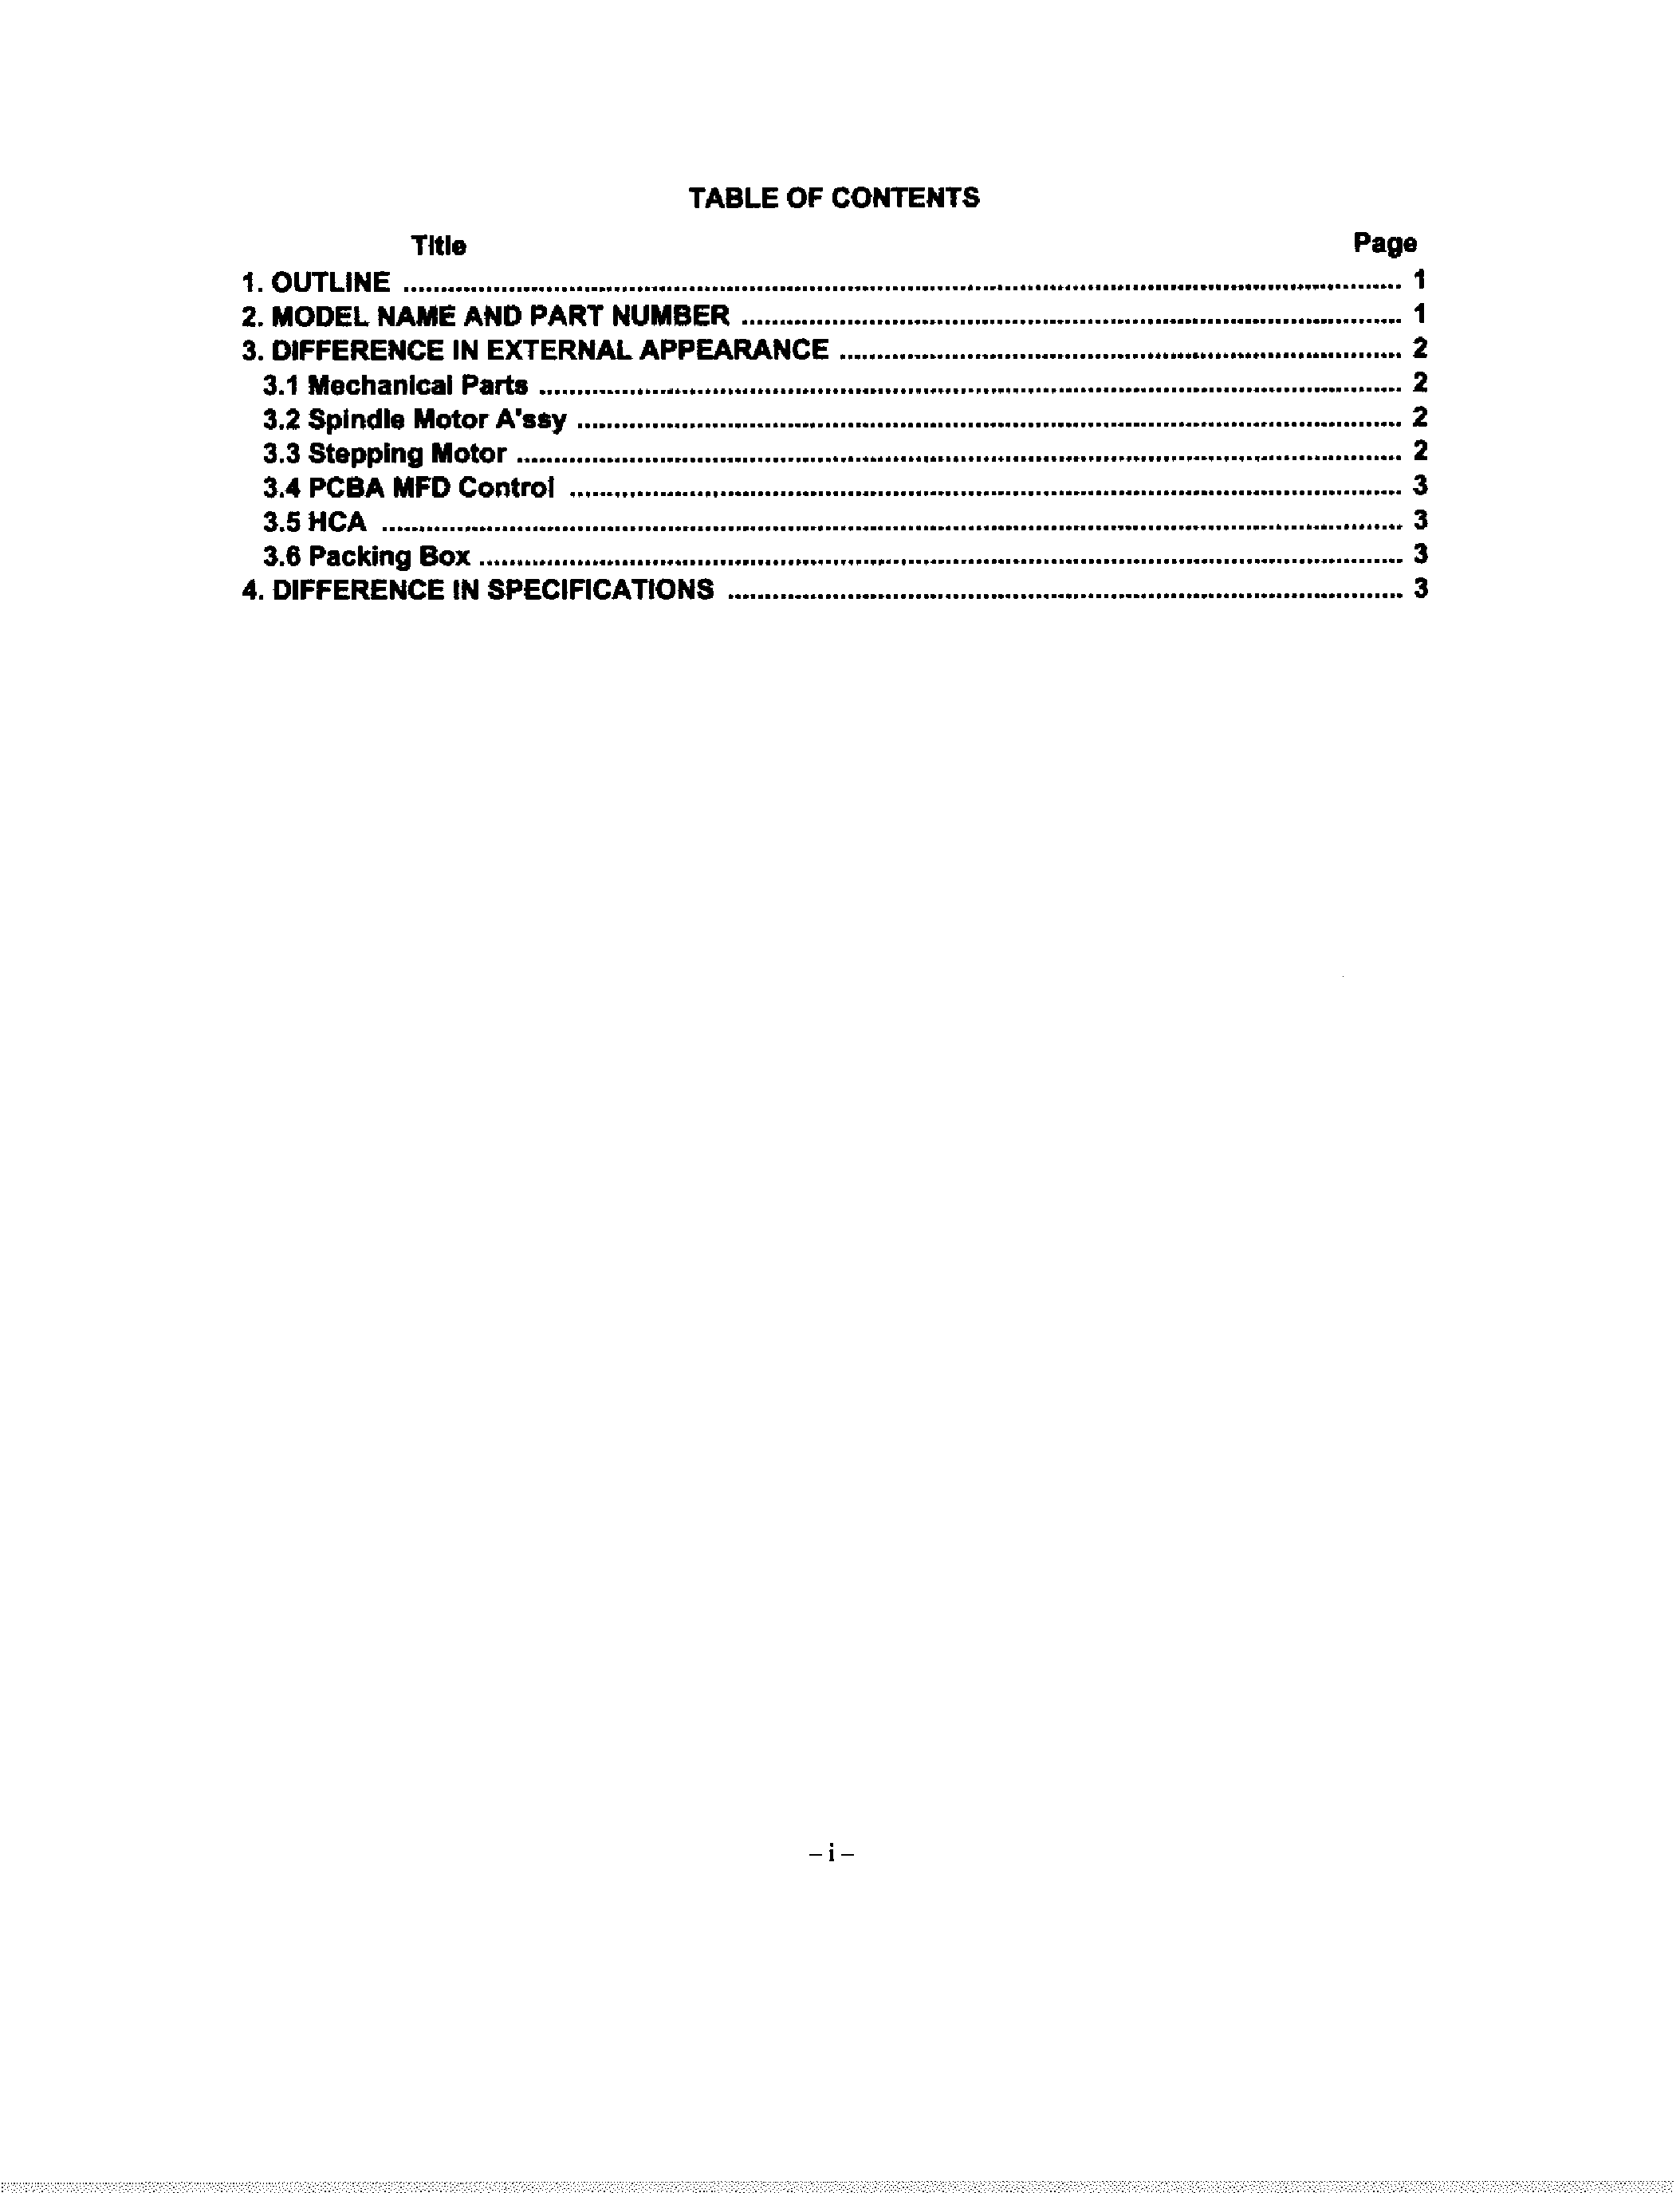 Datasheet FD-235HF-Cxxx - (FD-235HG/HF-Cxxx) Micro Floppy Disk Drive page 2